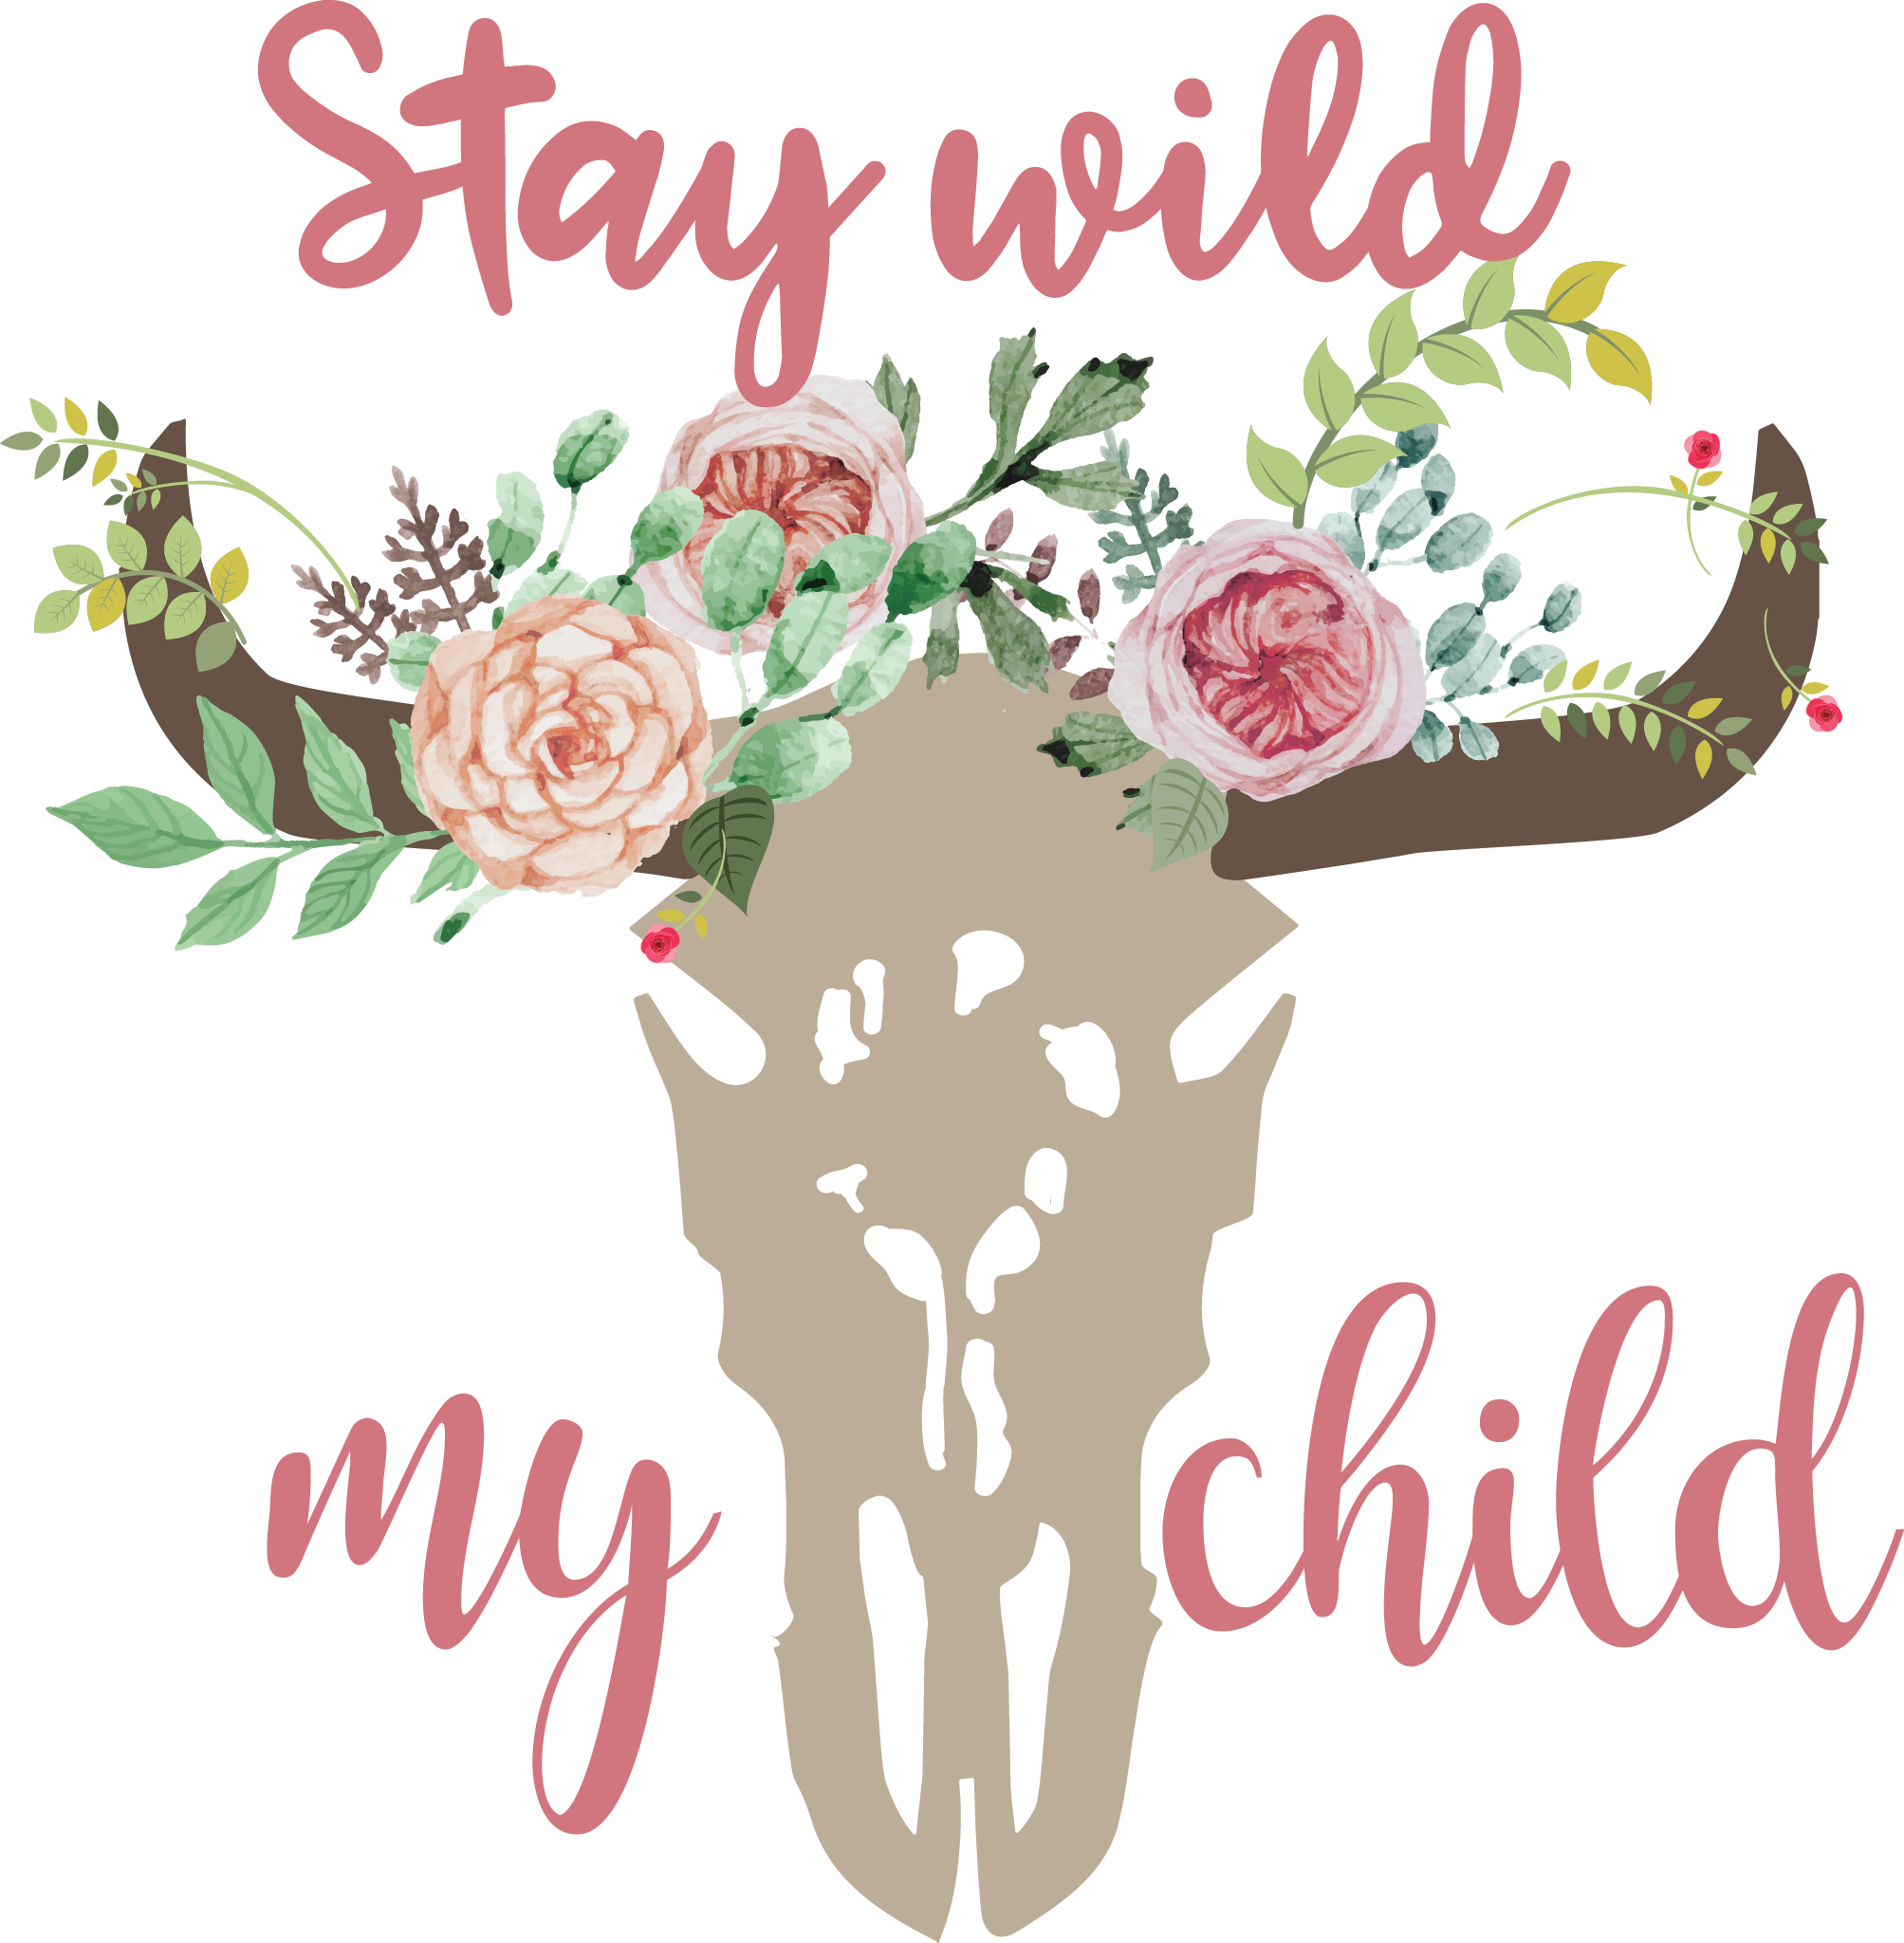 Stay Wild my Child - Printed Tee